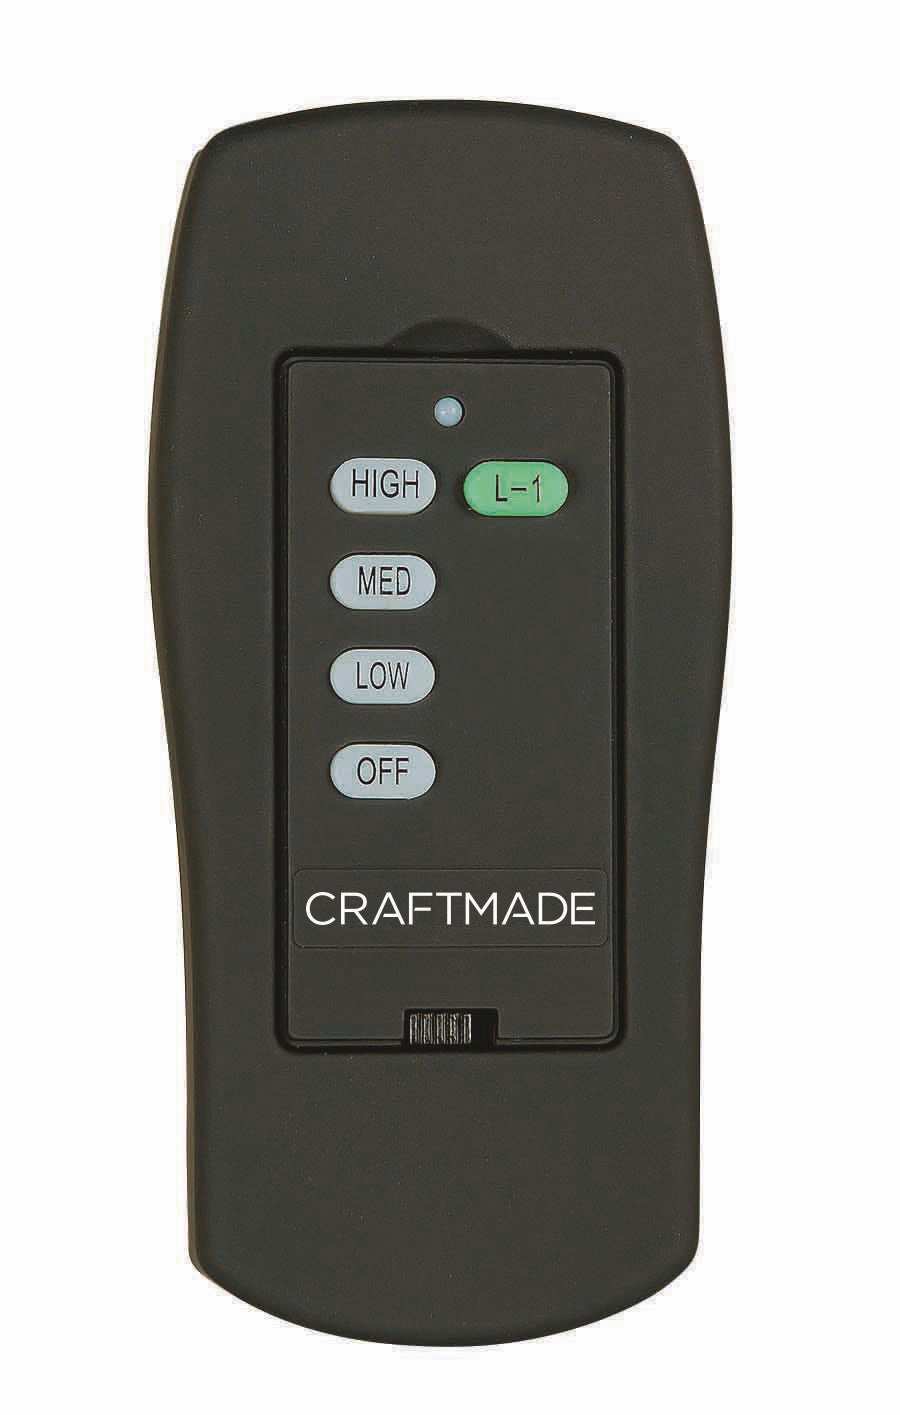 Craftmade - WUCI-1000 - Universal WIFI Fan Control - Universal Limited Lifetime Warranty an Control